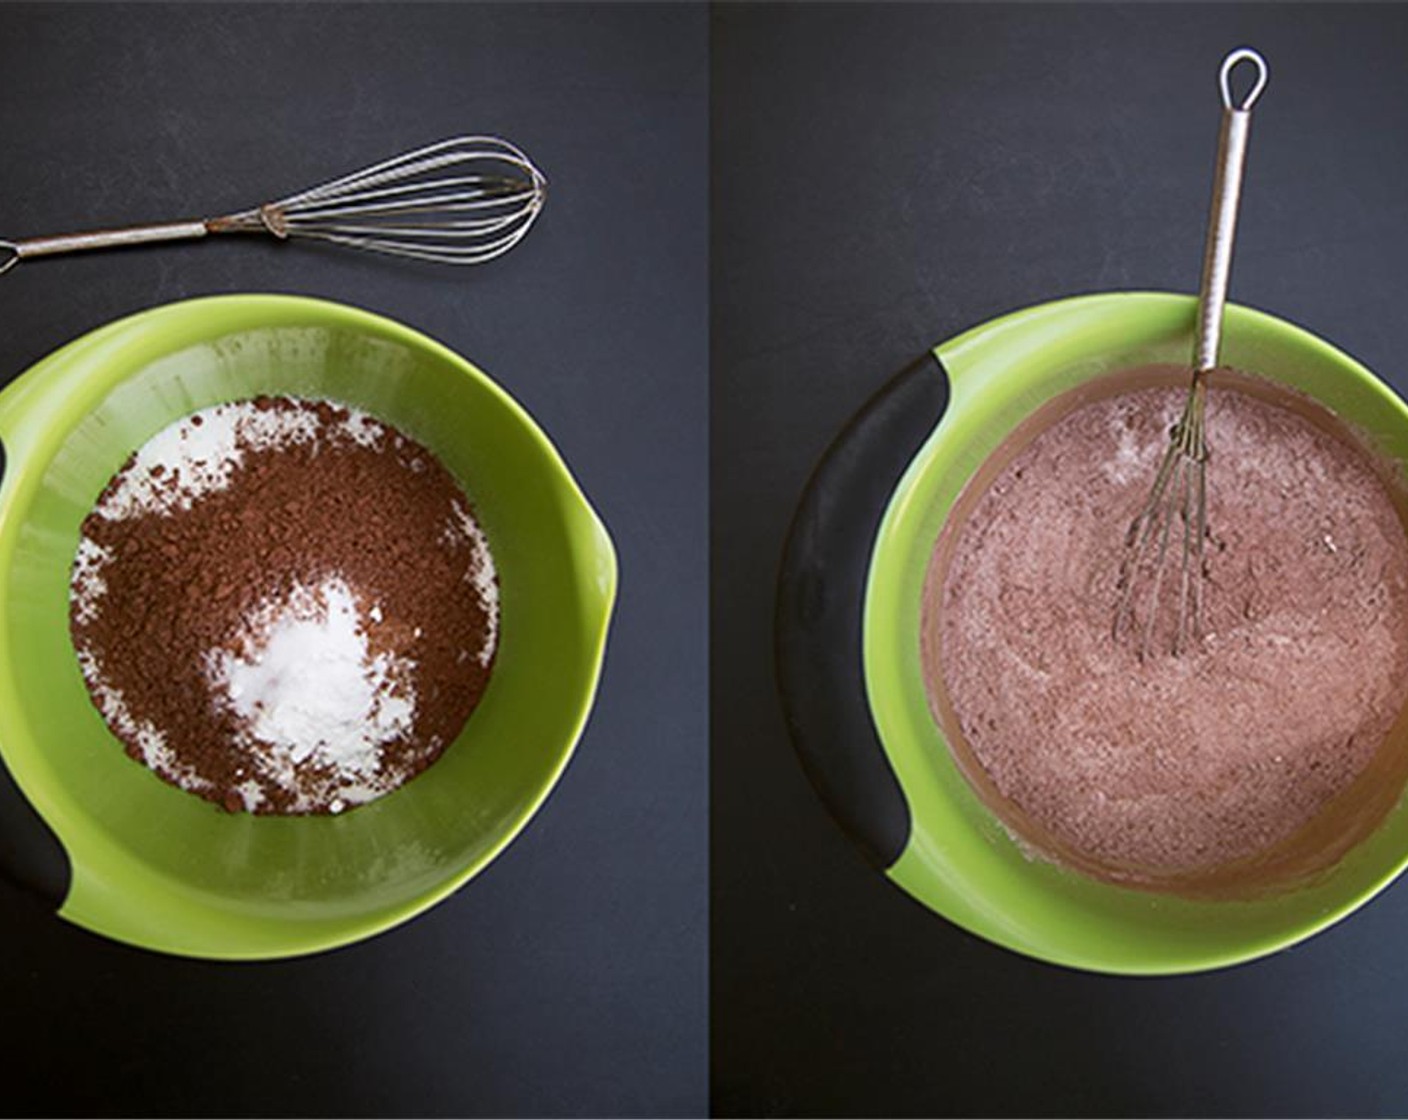 step 2 In a large bowl, whisk the All-Purpose Flour (2 cups), Granulated Sugar (2 cups), Dark Cocoa Powder (1/2 cup), Ground Cinnamon (1/2 Tbsp), Baking Powder (1 tsp), Baking Soda (1 tsp), and Salt (1 tsp).